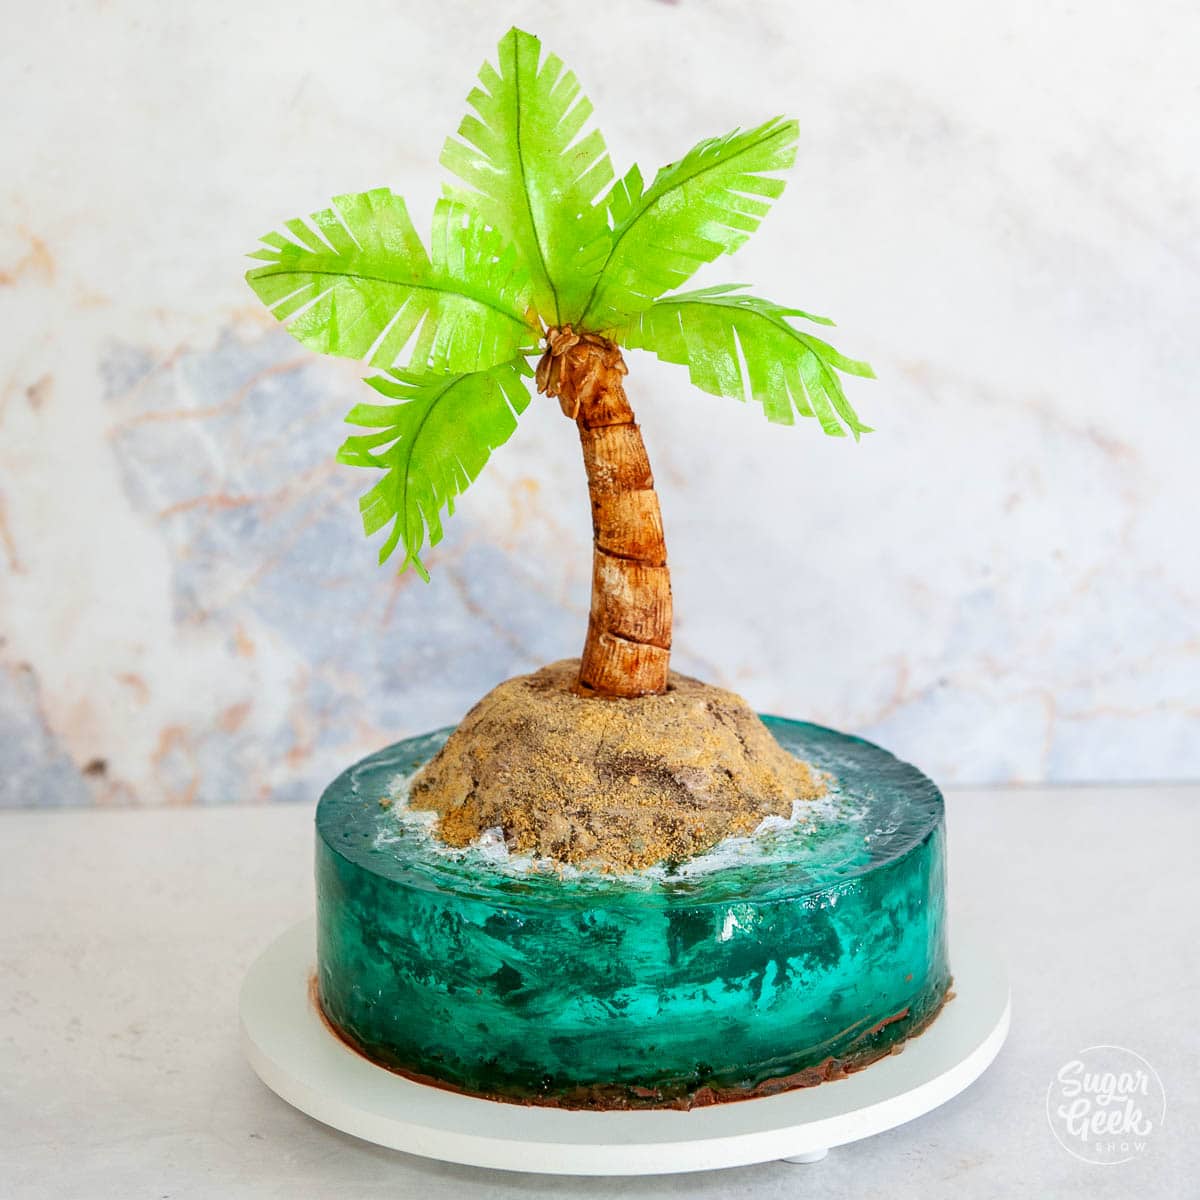 jelly island magic cake with edible palm tree